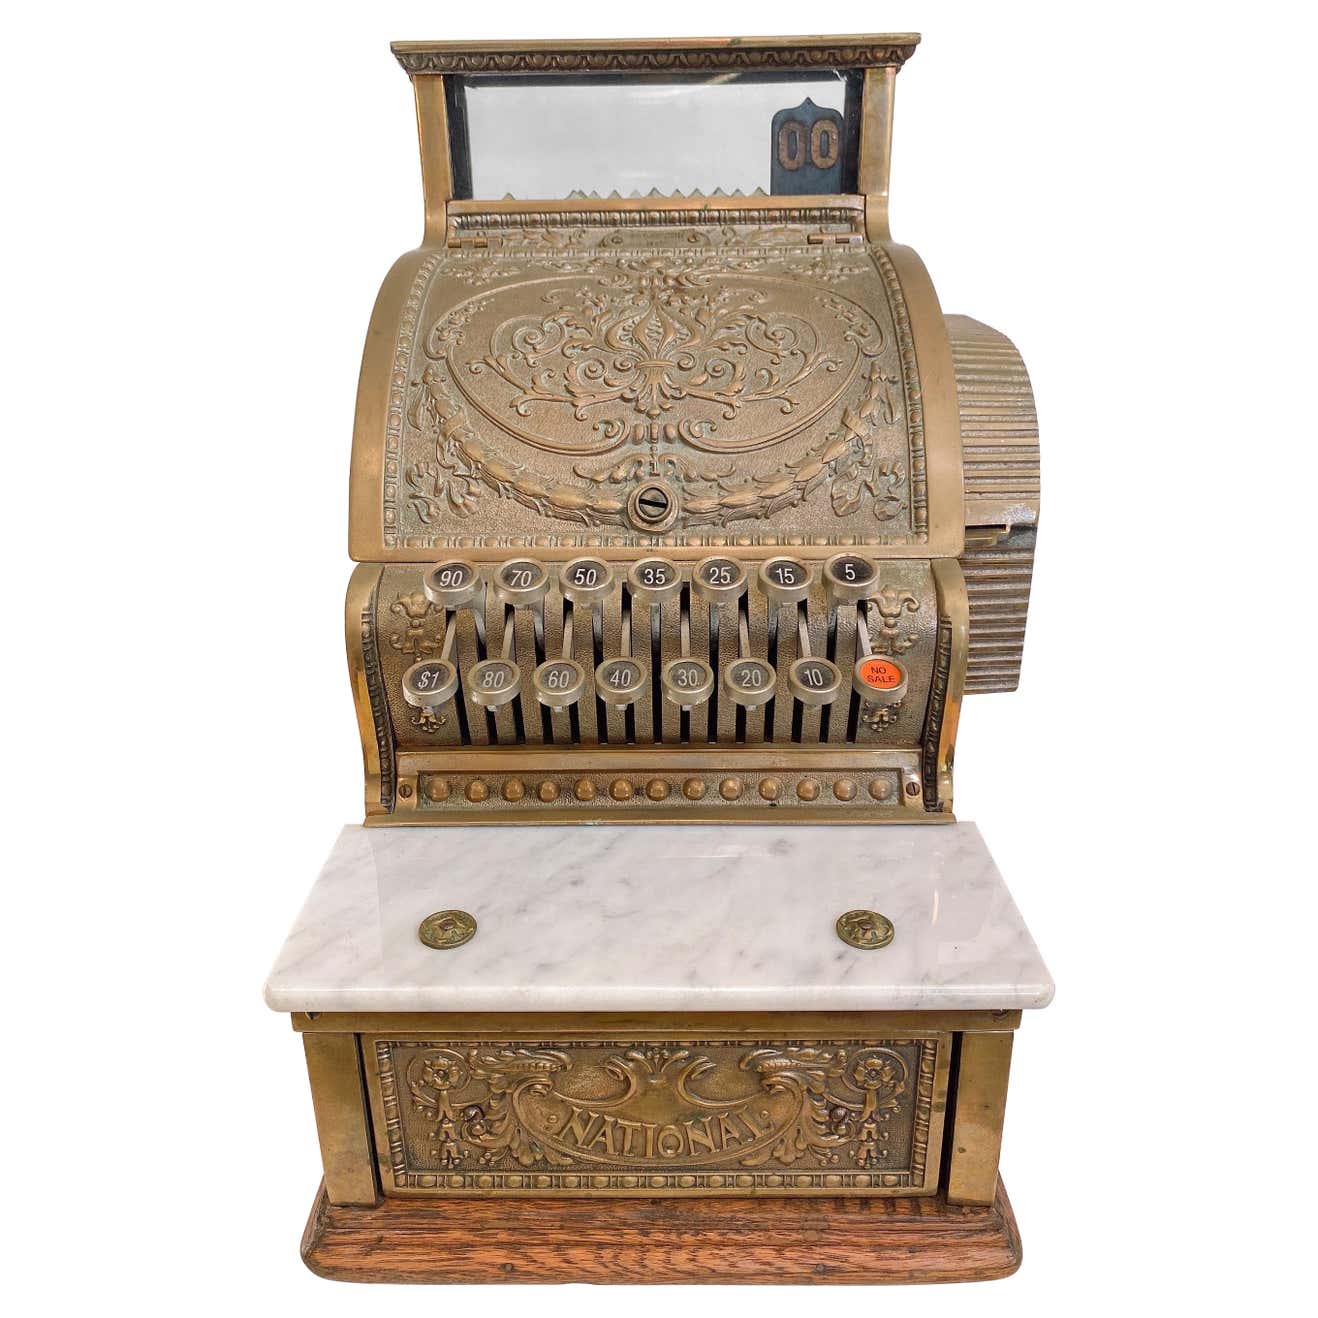 early 1900s brass cash register